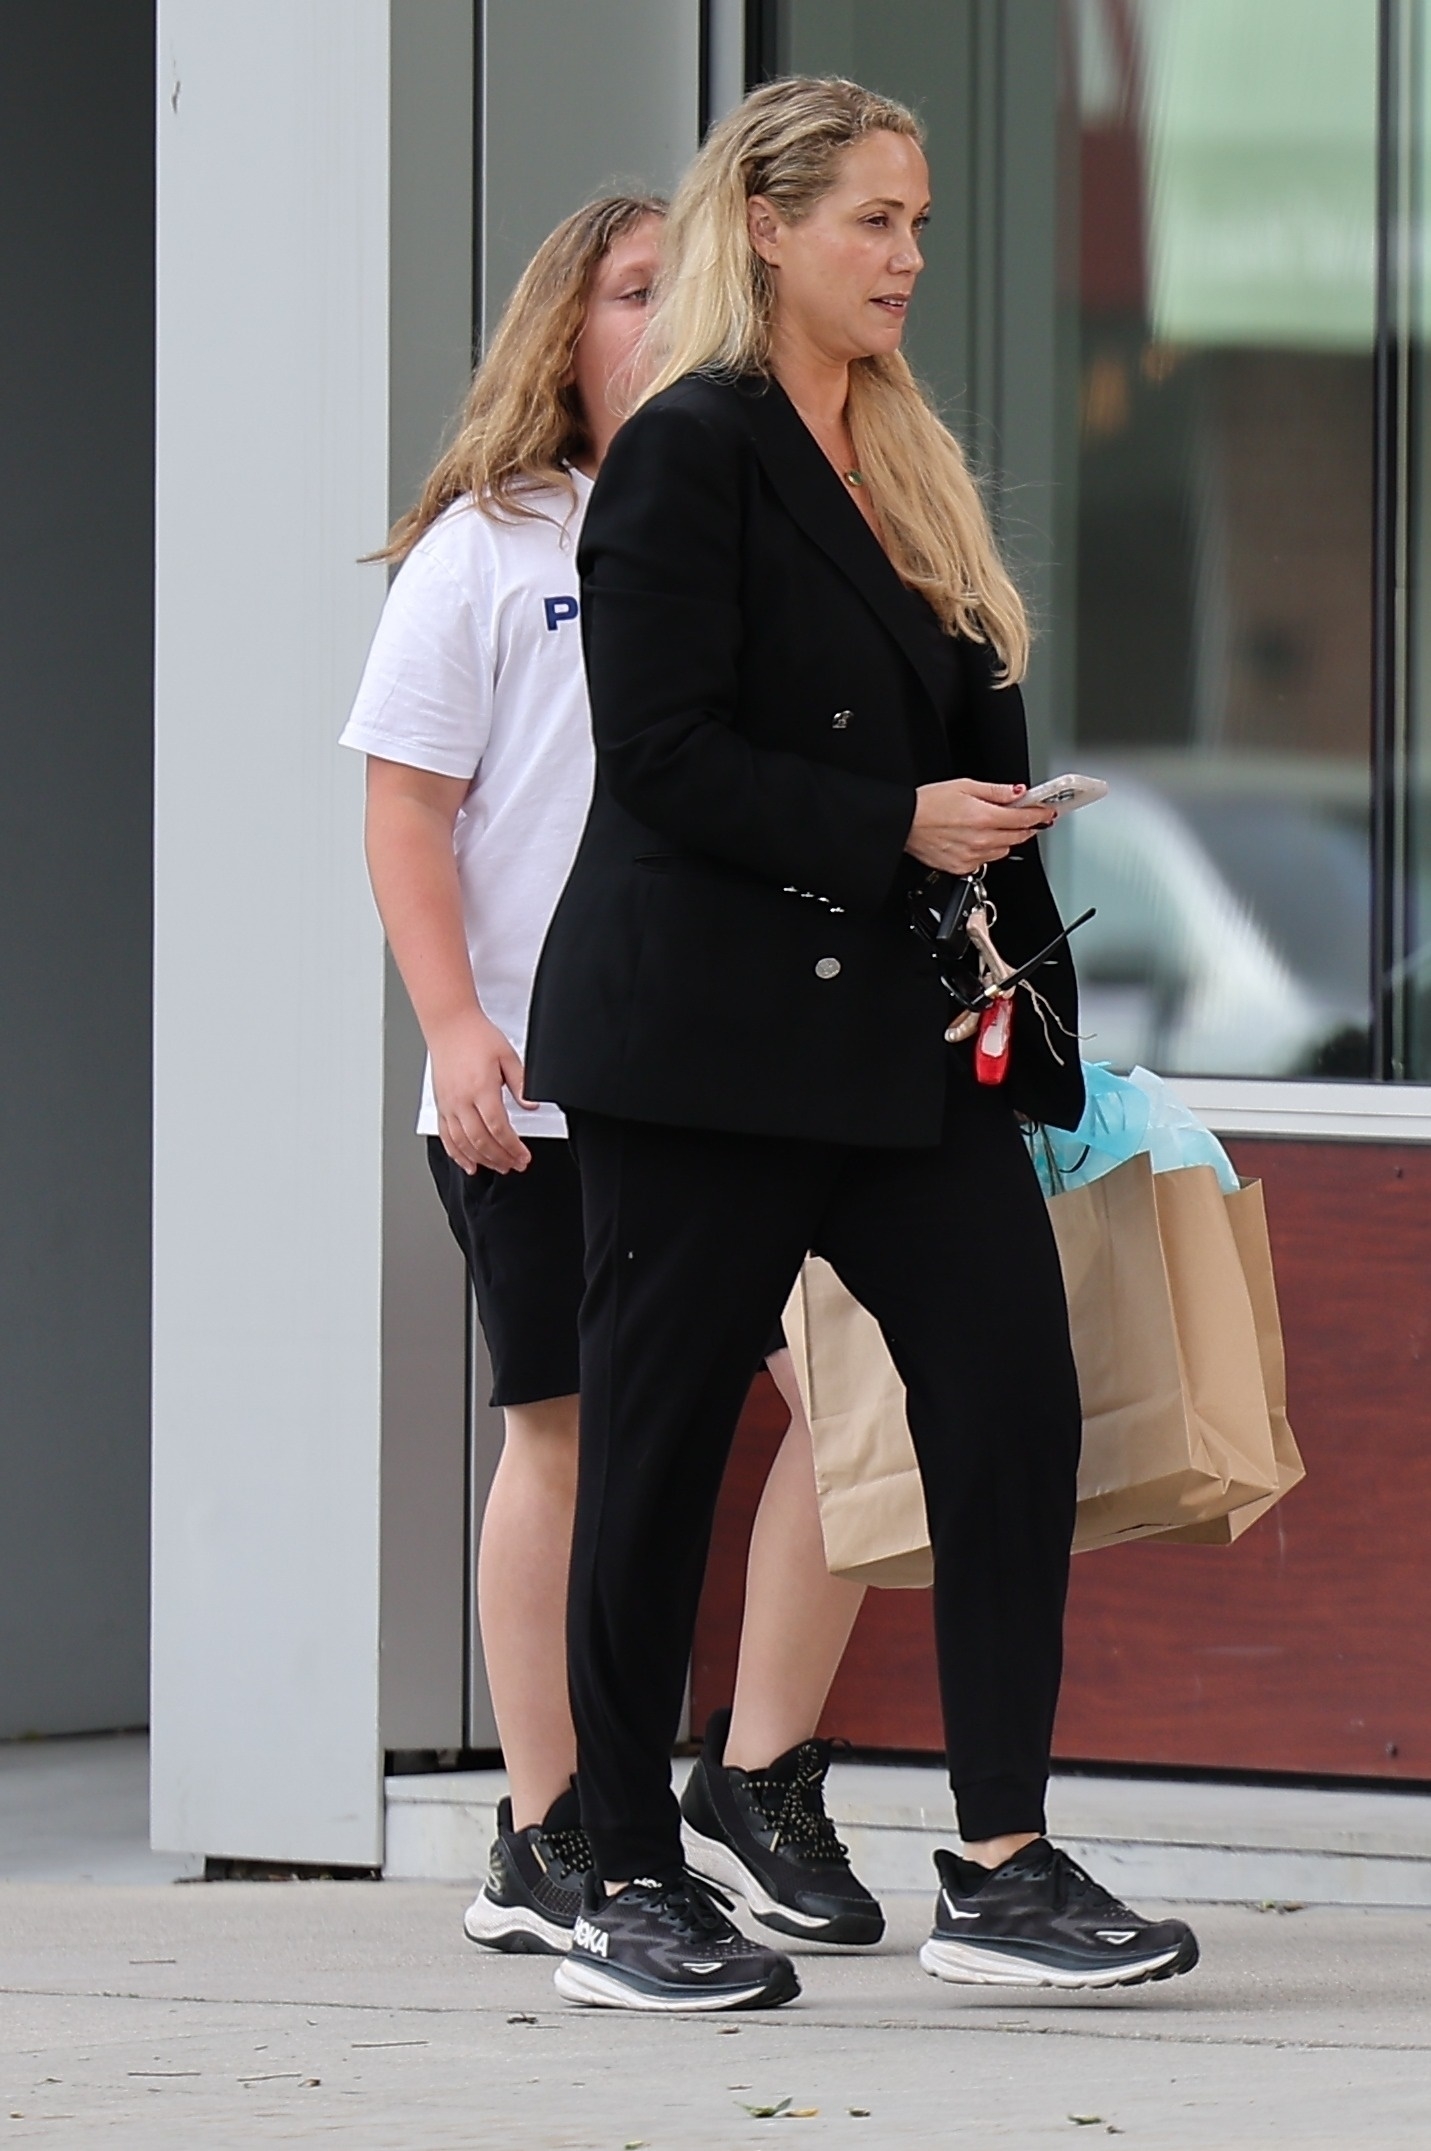 Elizabeth Berkley wore an all-black ensemble during her shopping spree